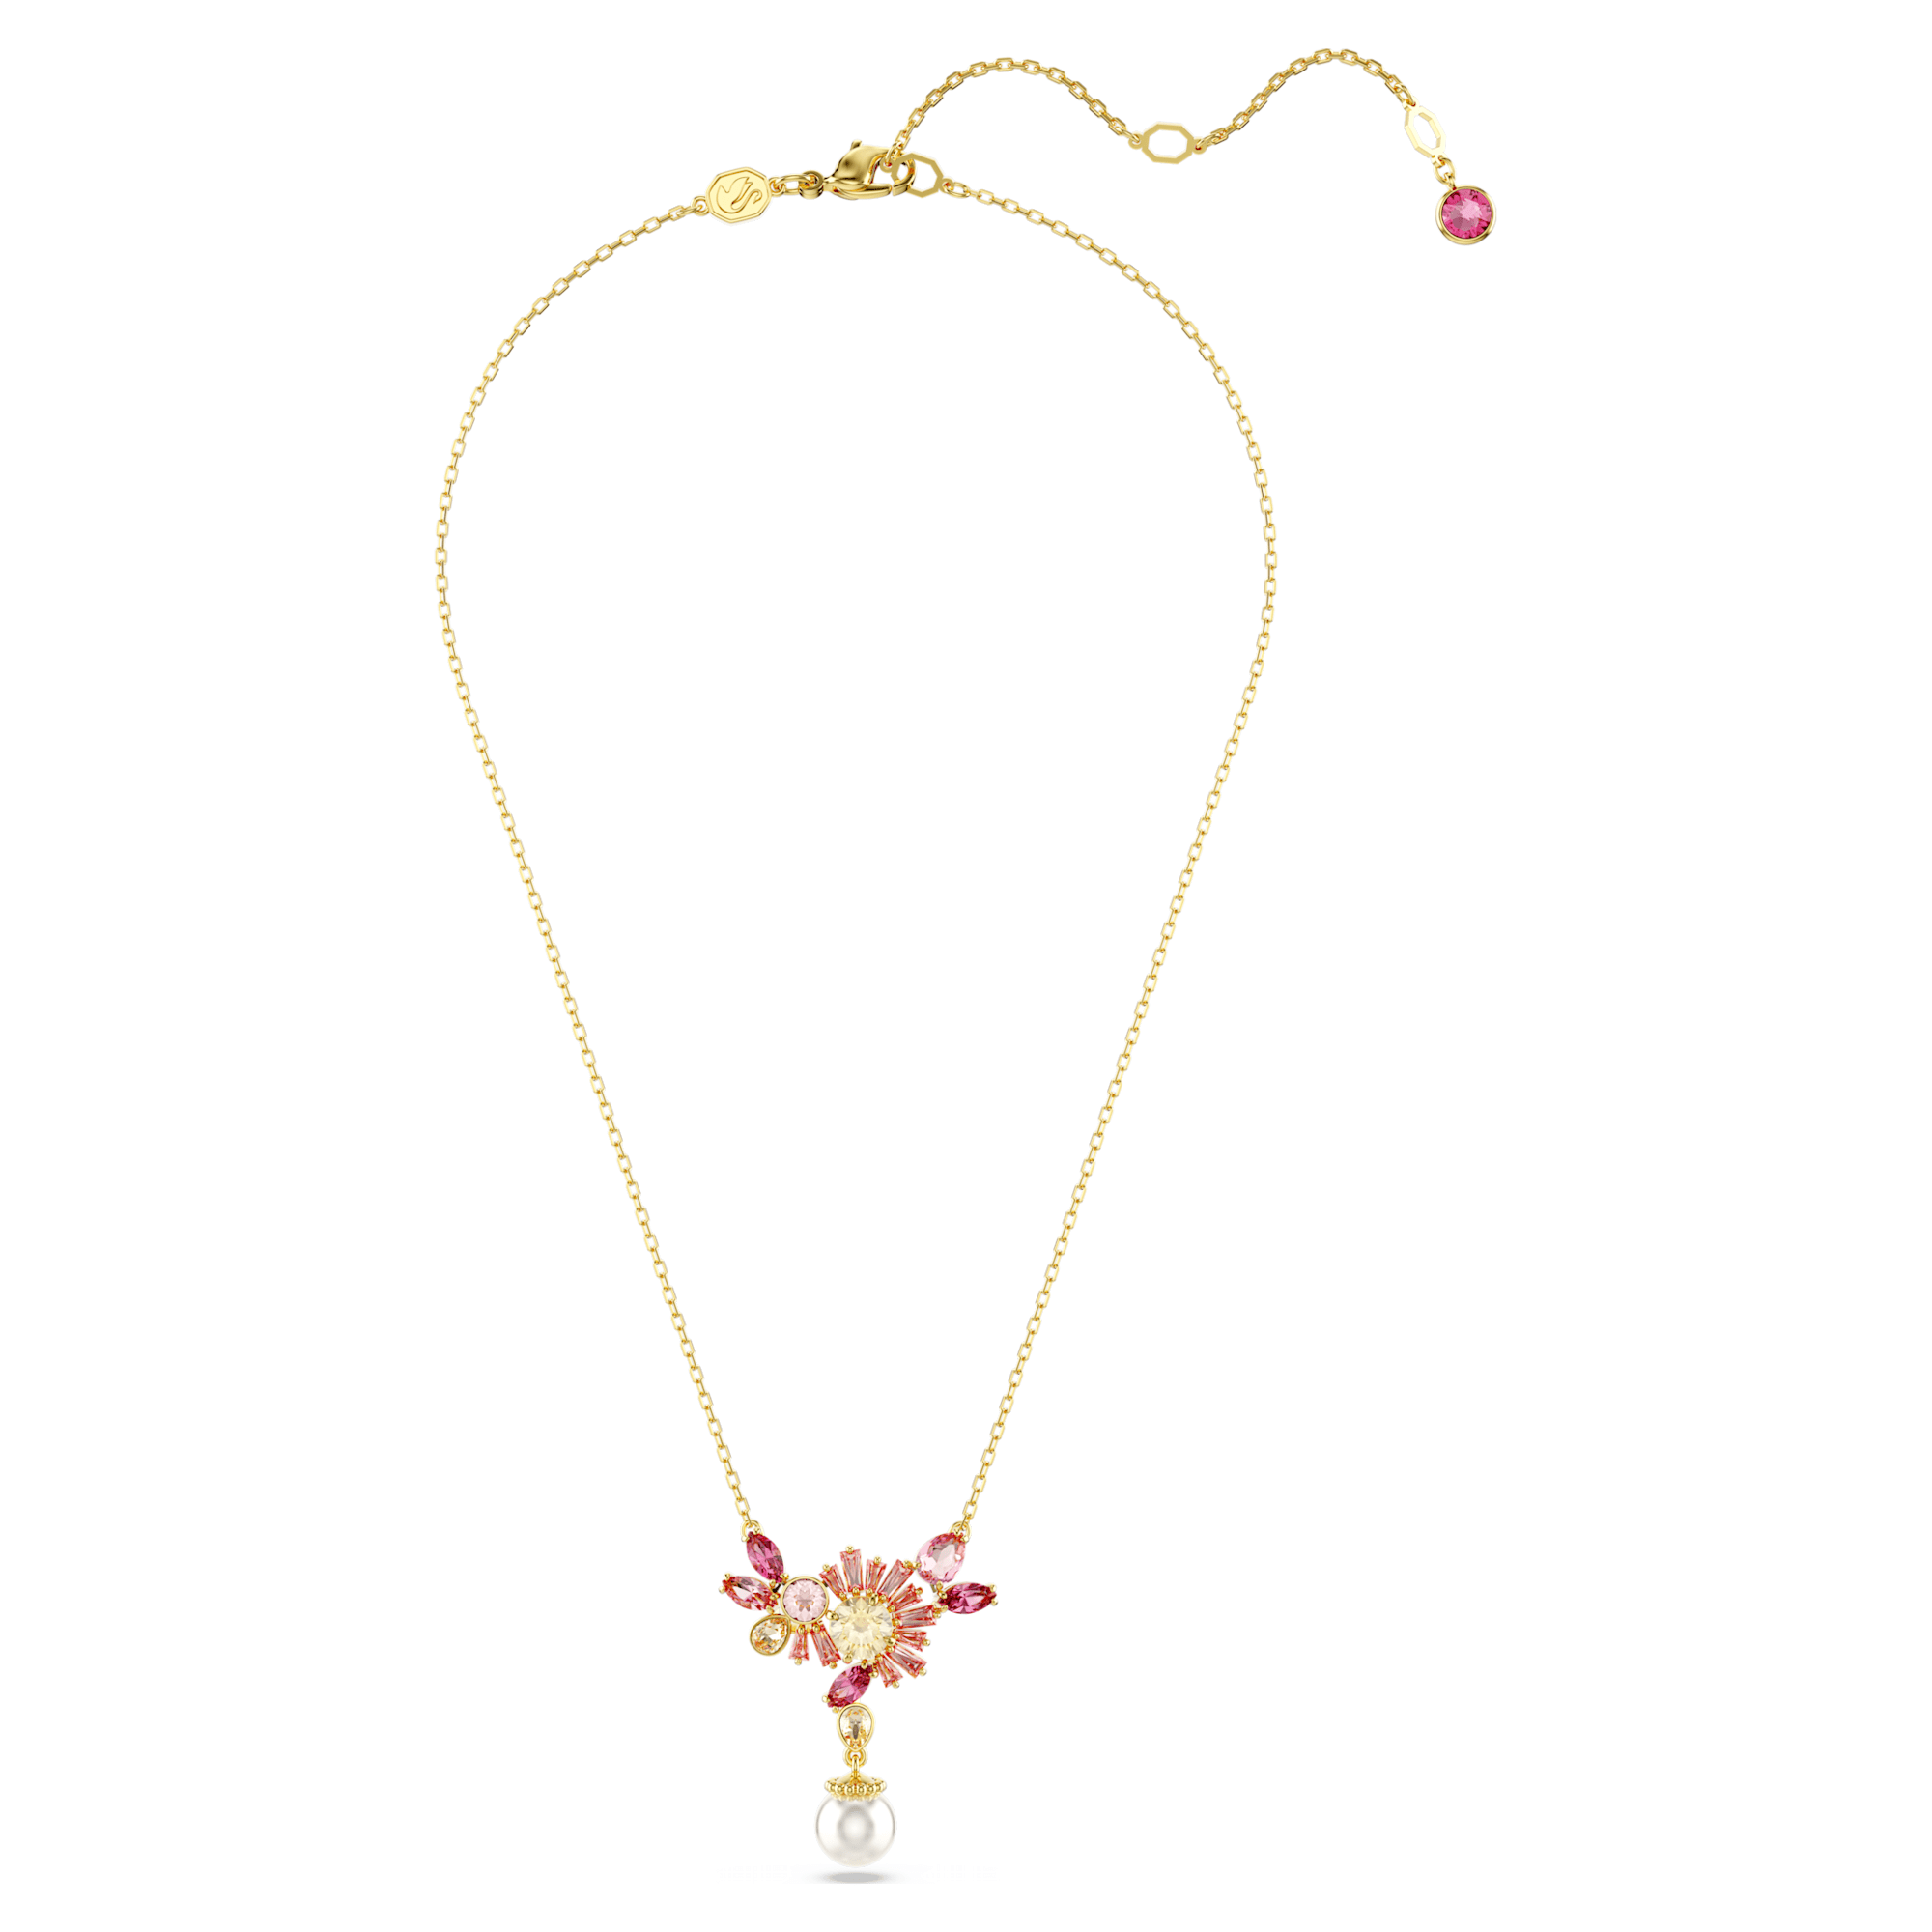 Gema - Flower - Rose Gold - Necklace - Swarovski